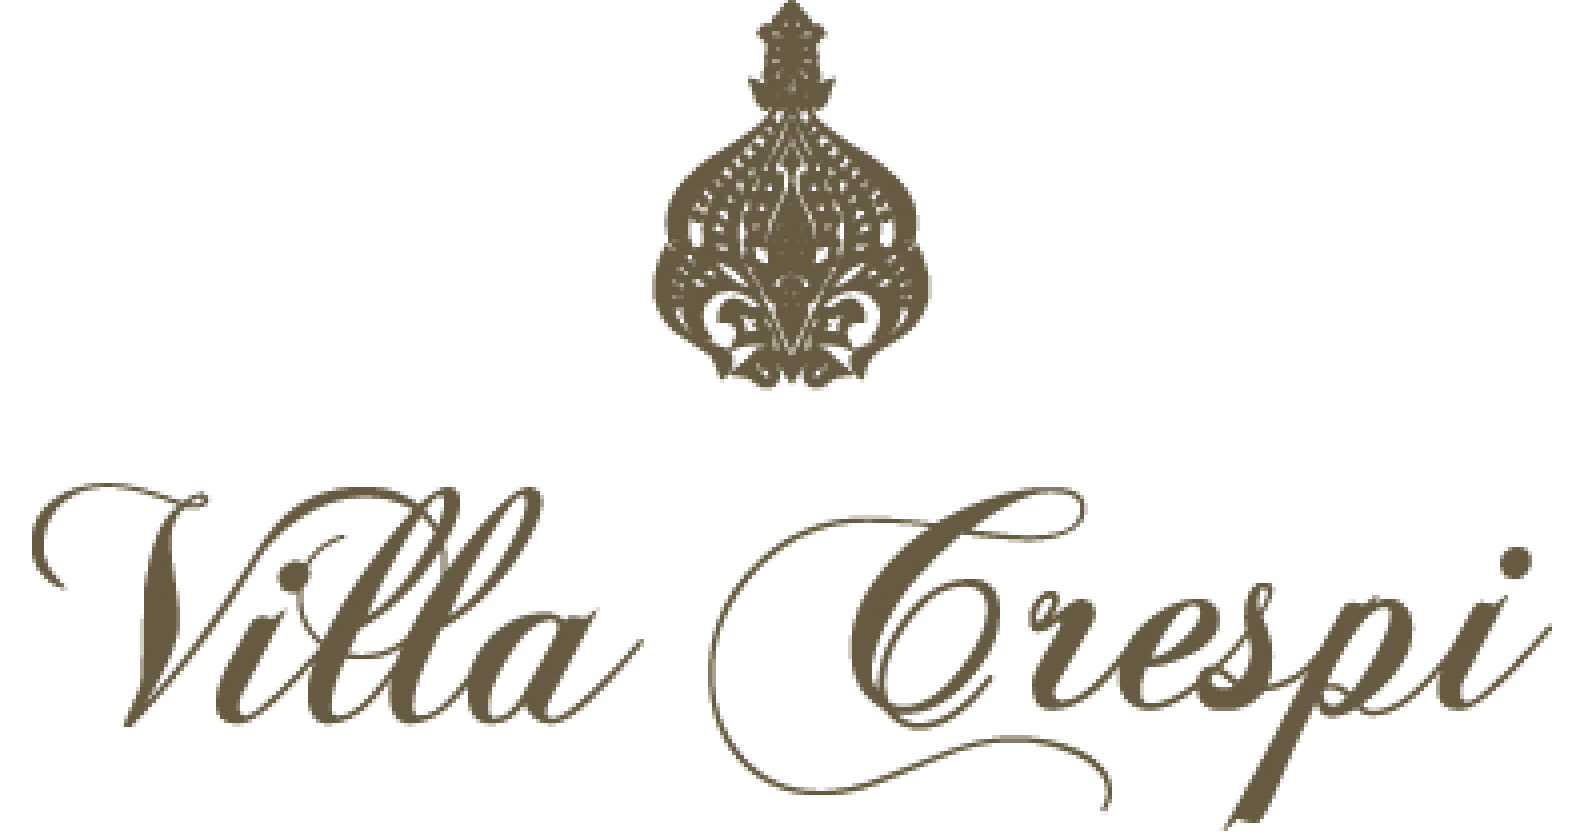 Michelin star Relais et Chateaux Villa Crespi continues advancing its name